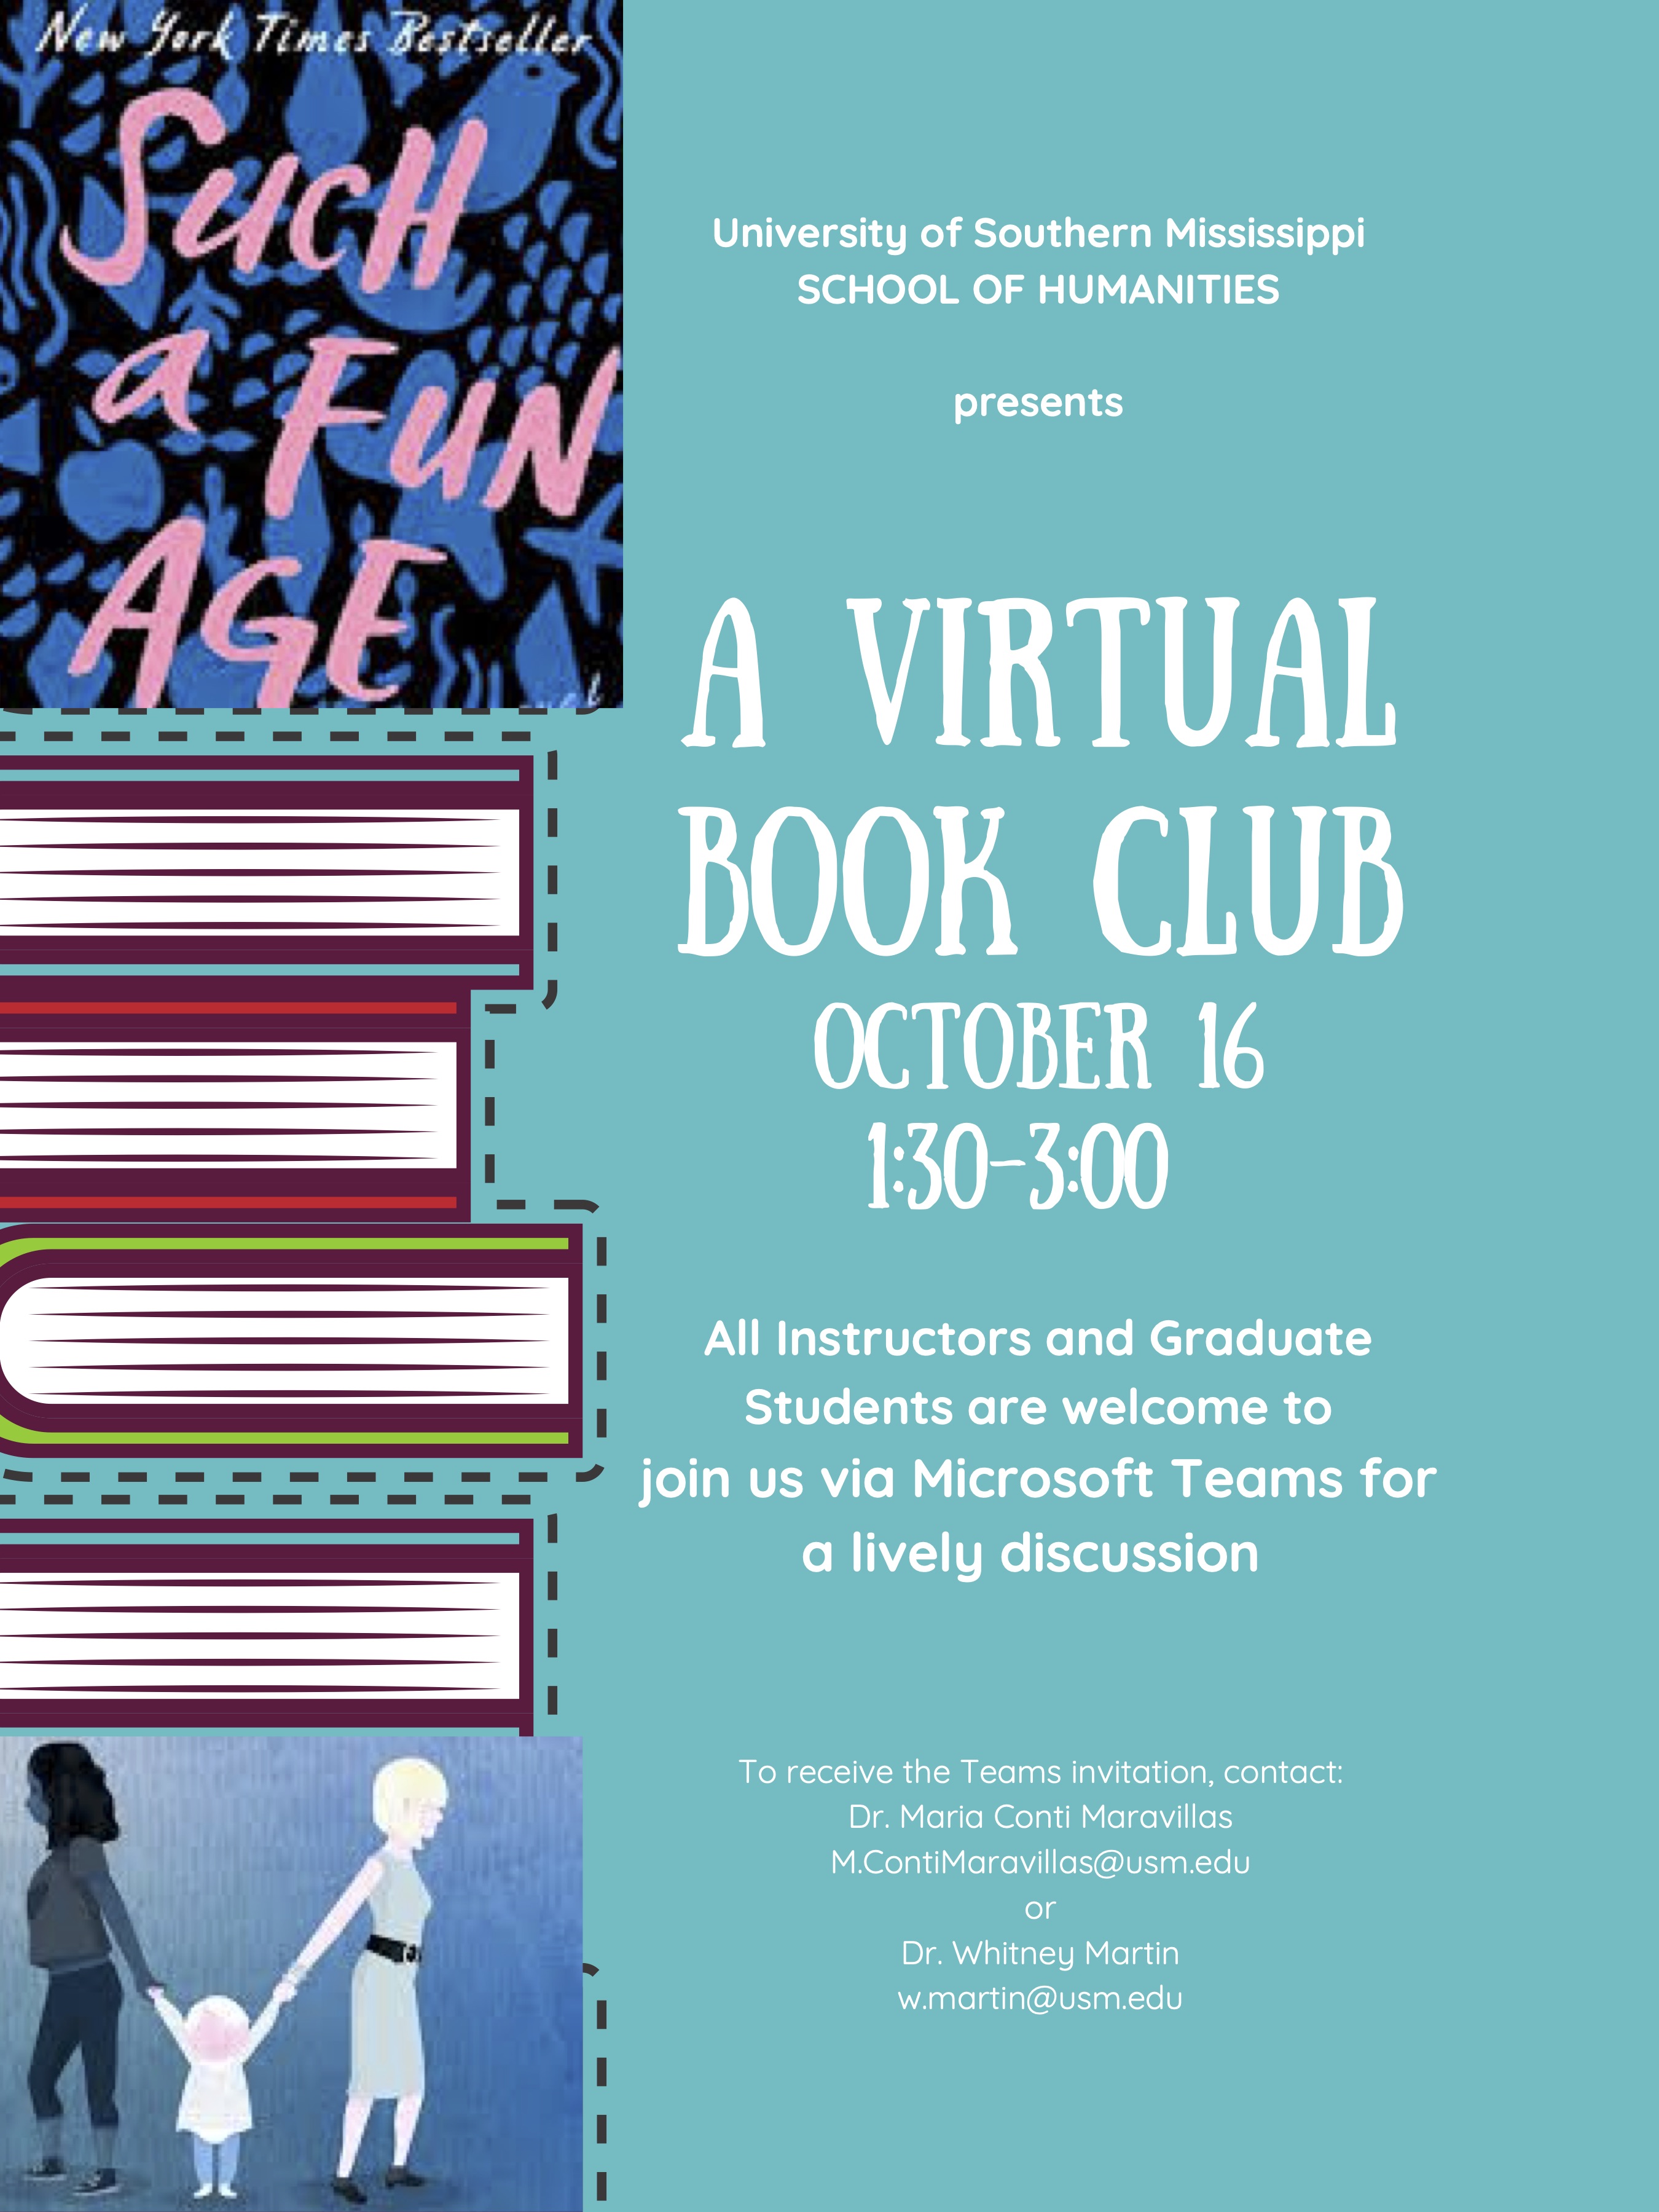 School of Humanities Virtual Book Club